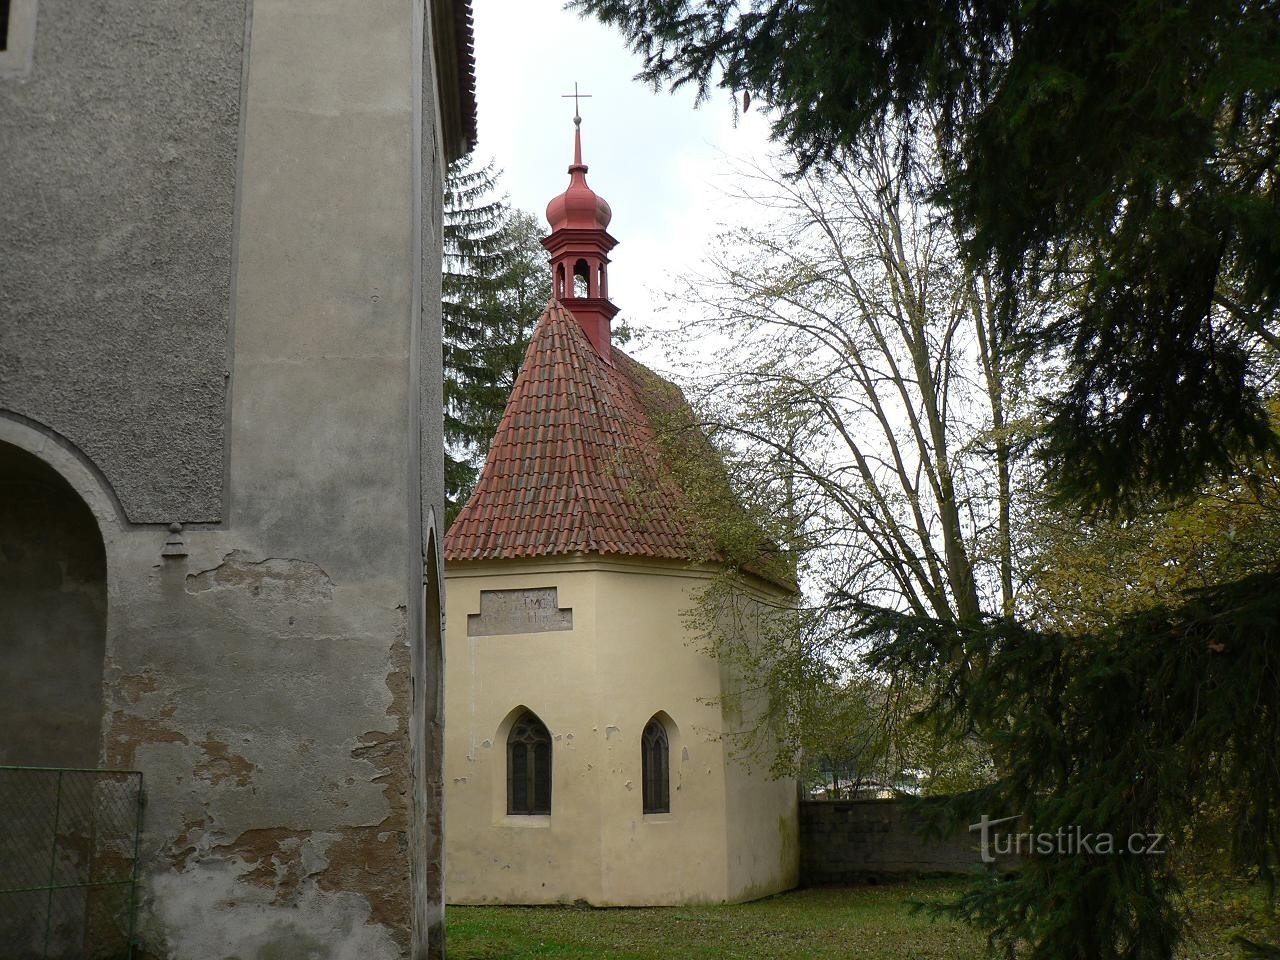 Blatná, chapel of St. Michael